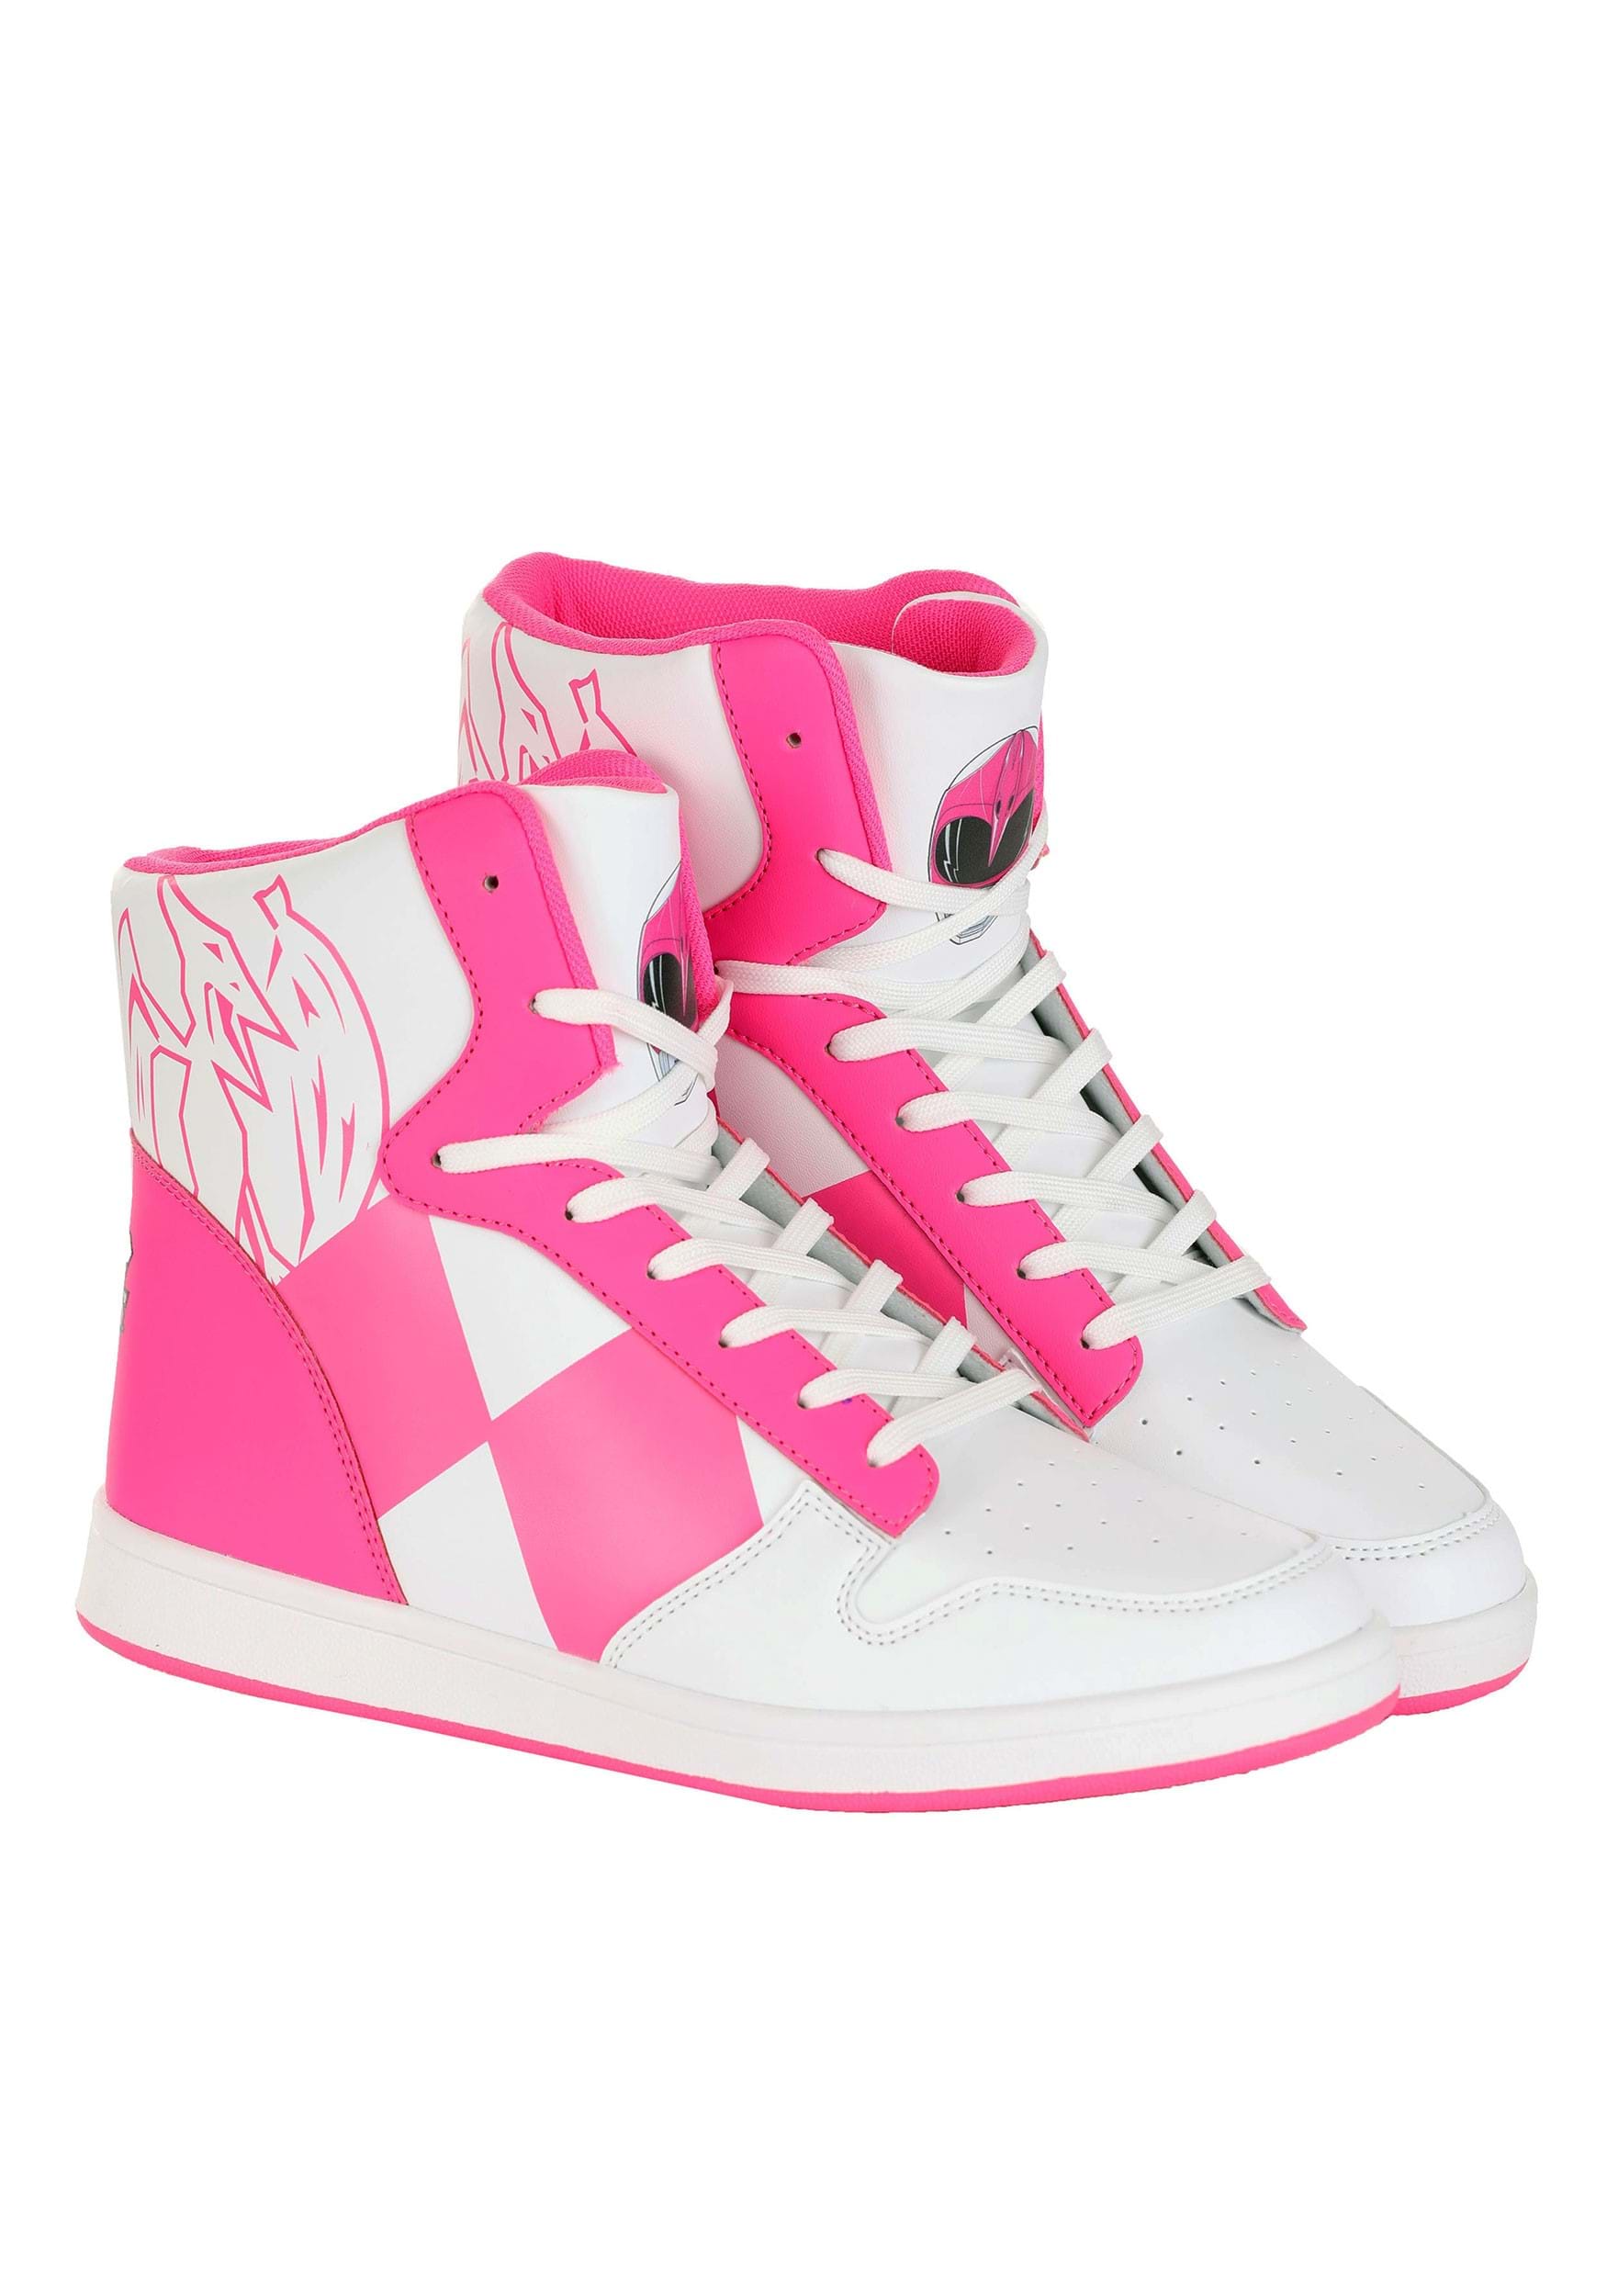 Pink Power Rangers Costume Inspired Sneakers